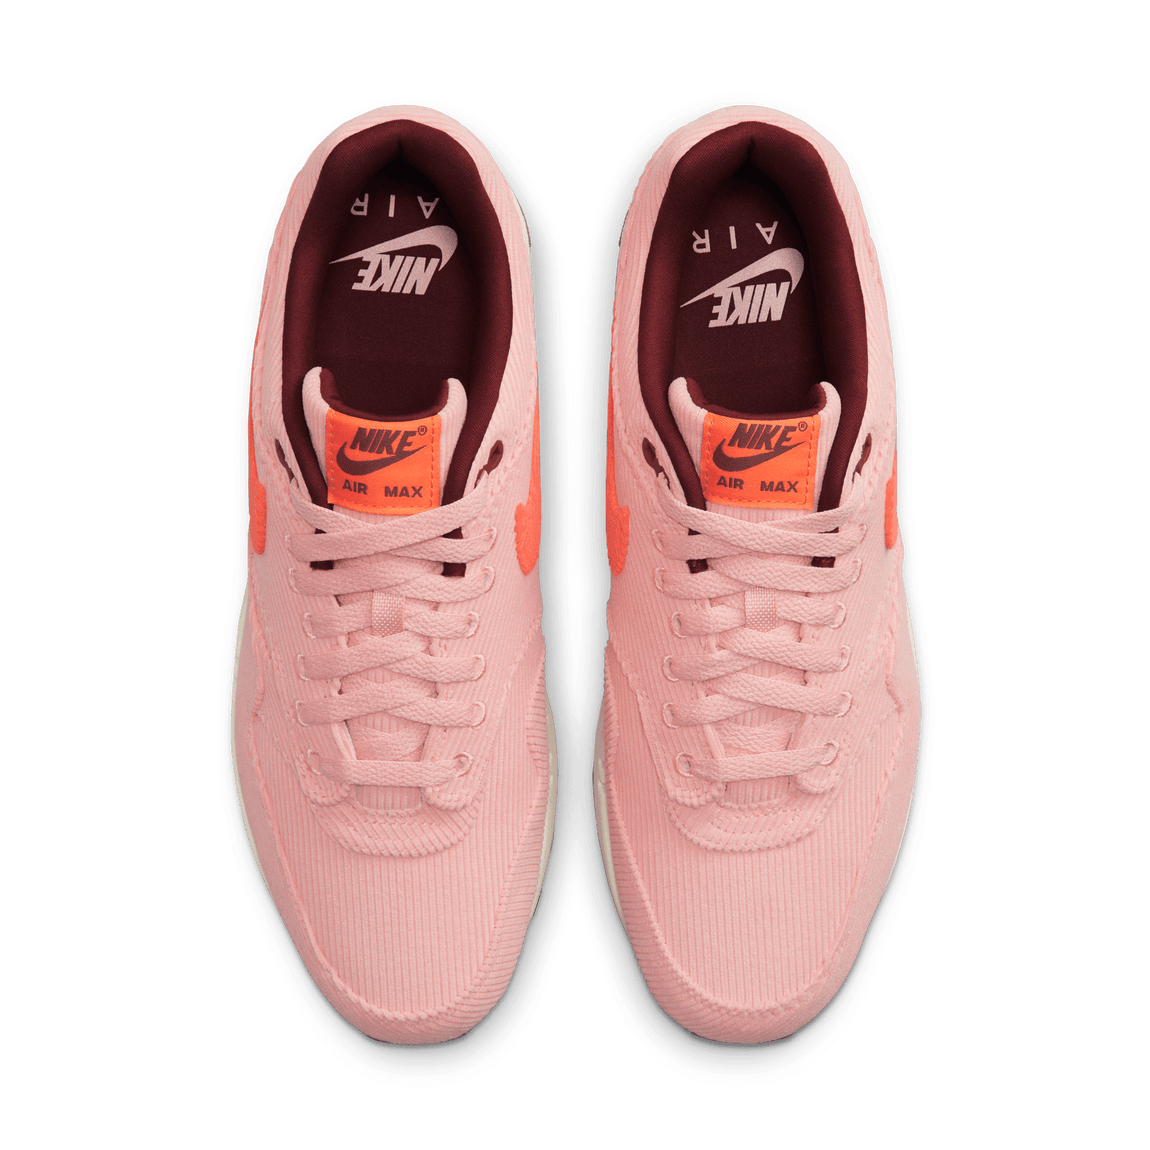 Nike Air Max 1 Premium (Coral Stardust/Bright Coral-Oxen Brown) 5/26 - Nike Air Max 1 Premium (Coral Stardust/Bright Coral-Oxen Brown) 5/26 - 